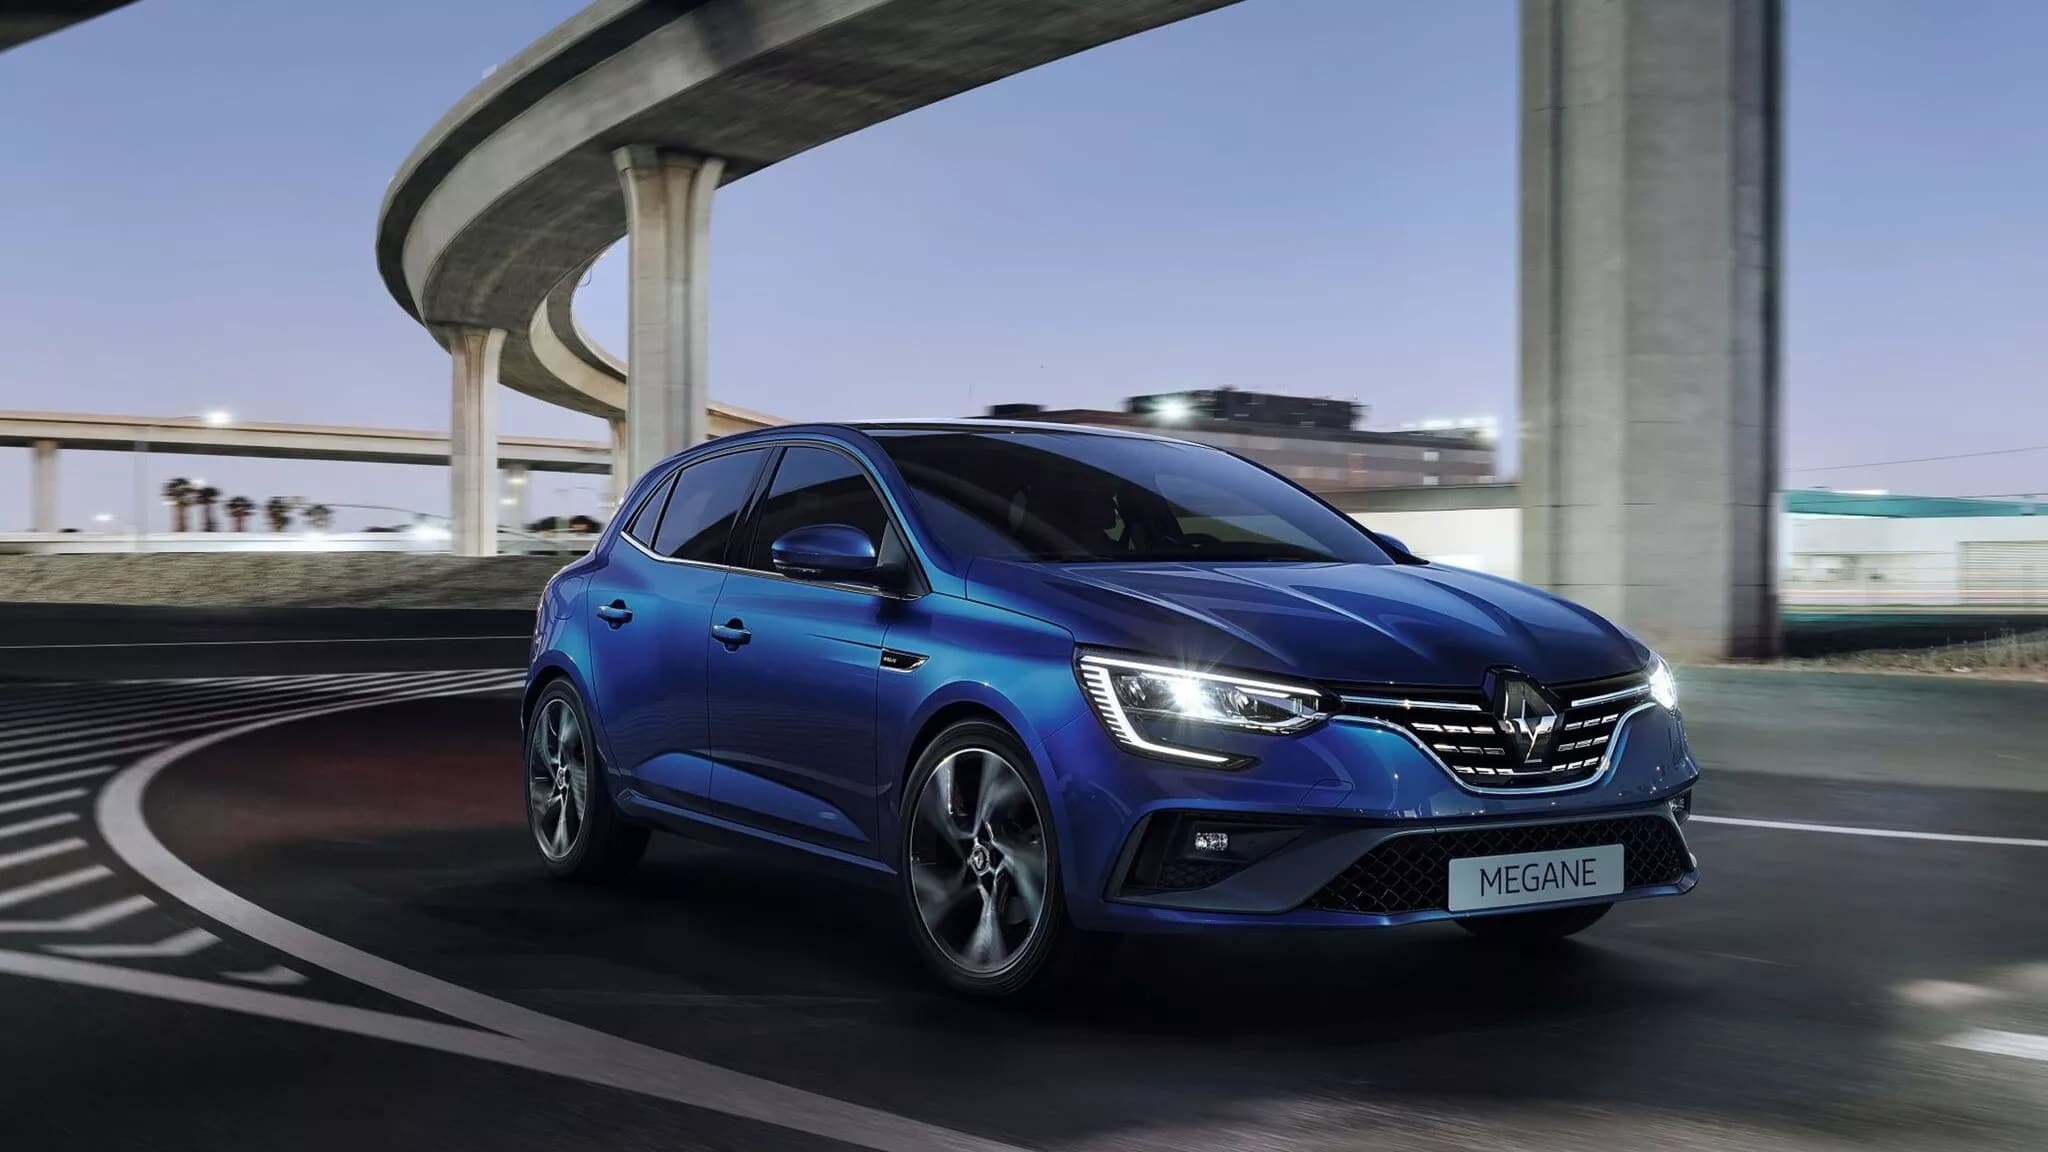 Renault Megane offres soler automobiles